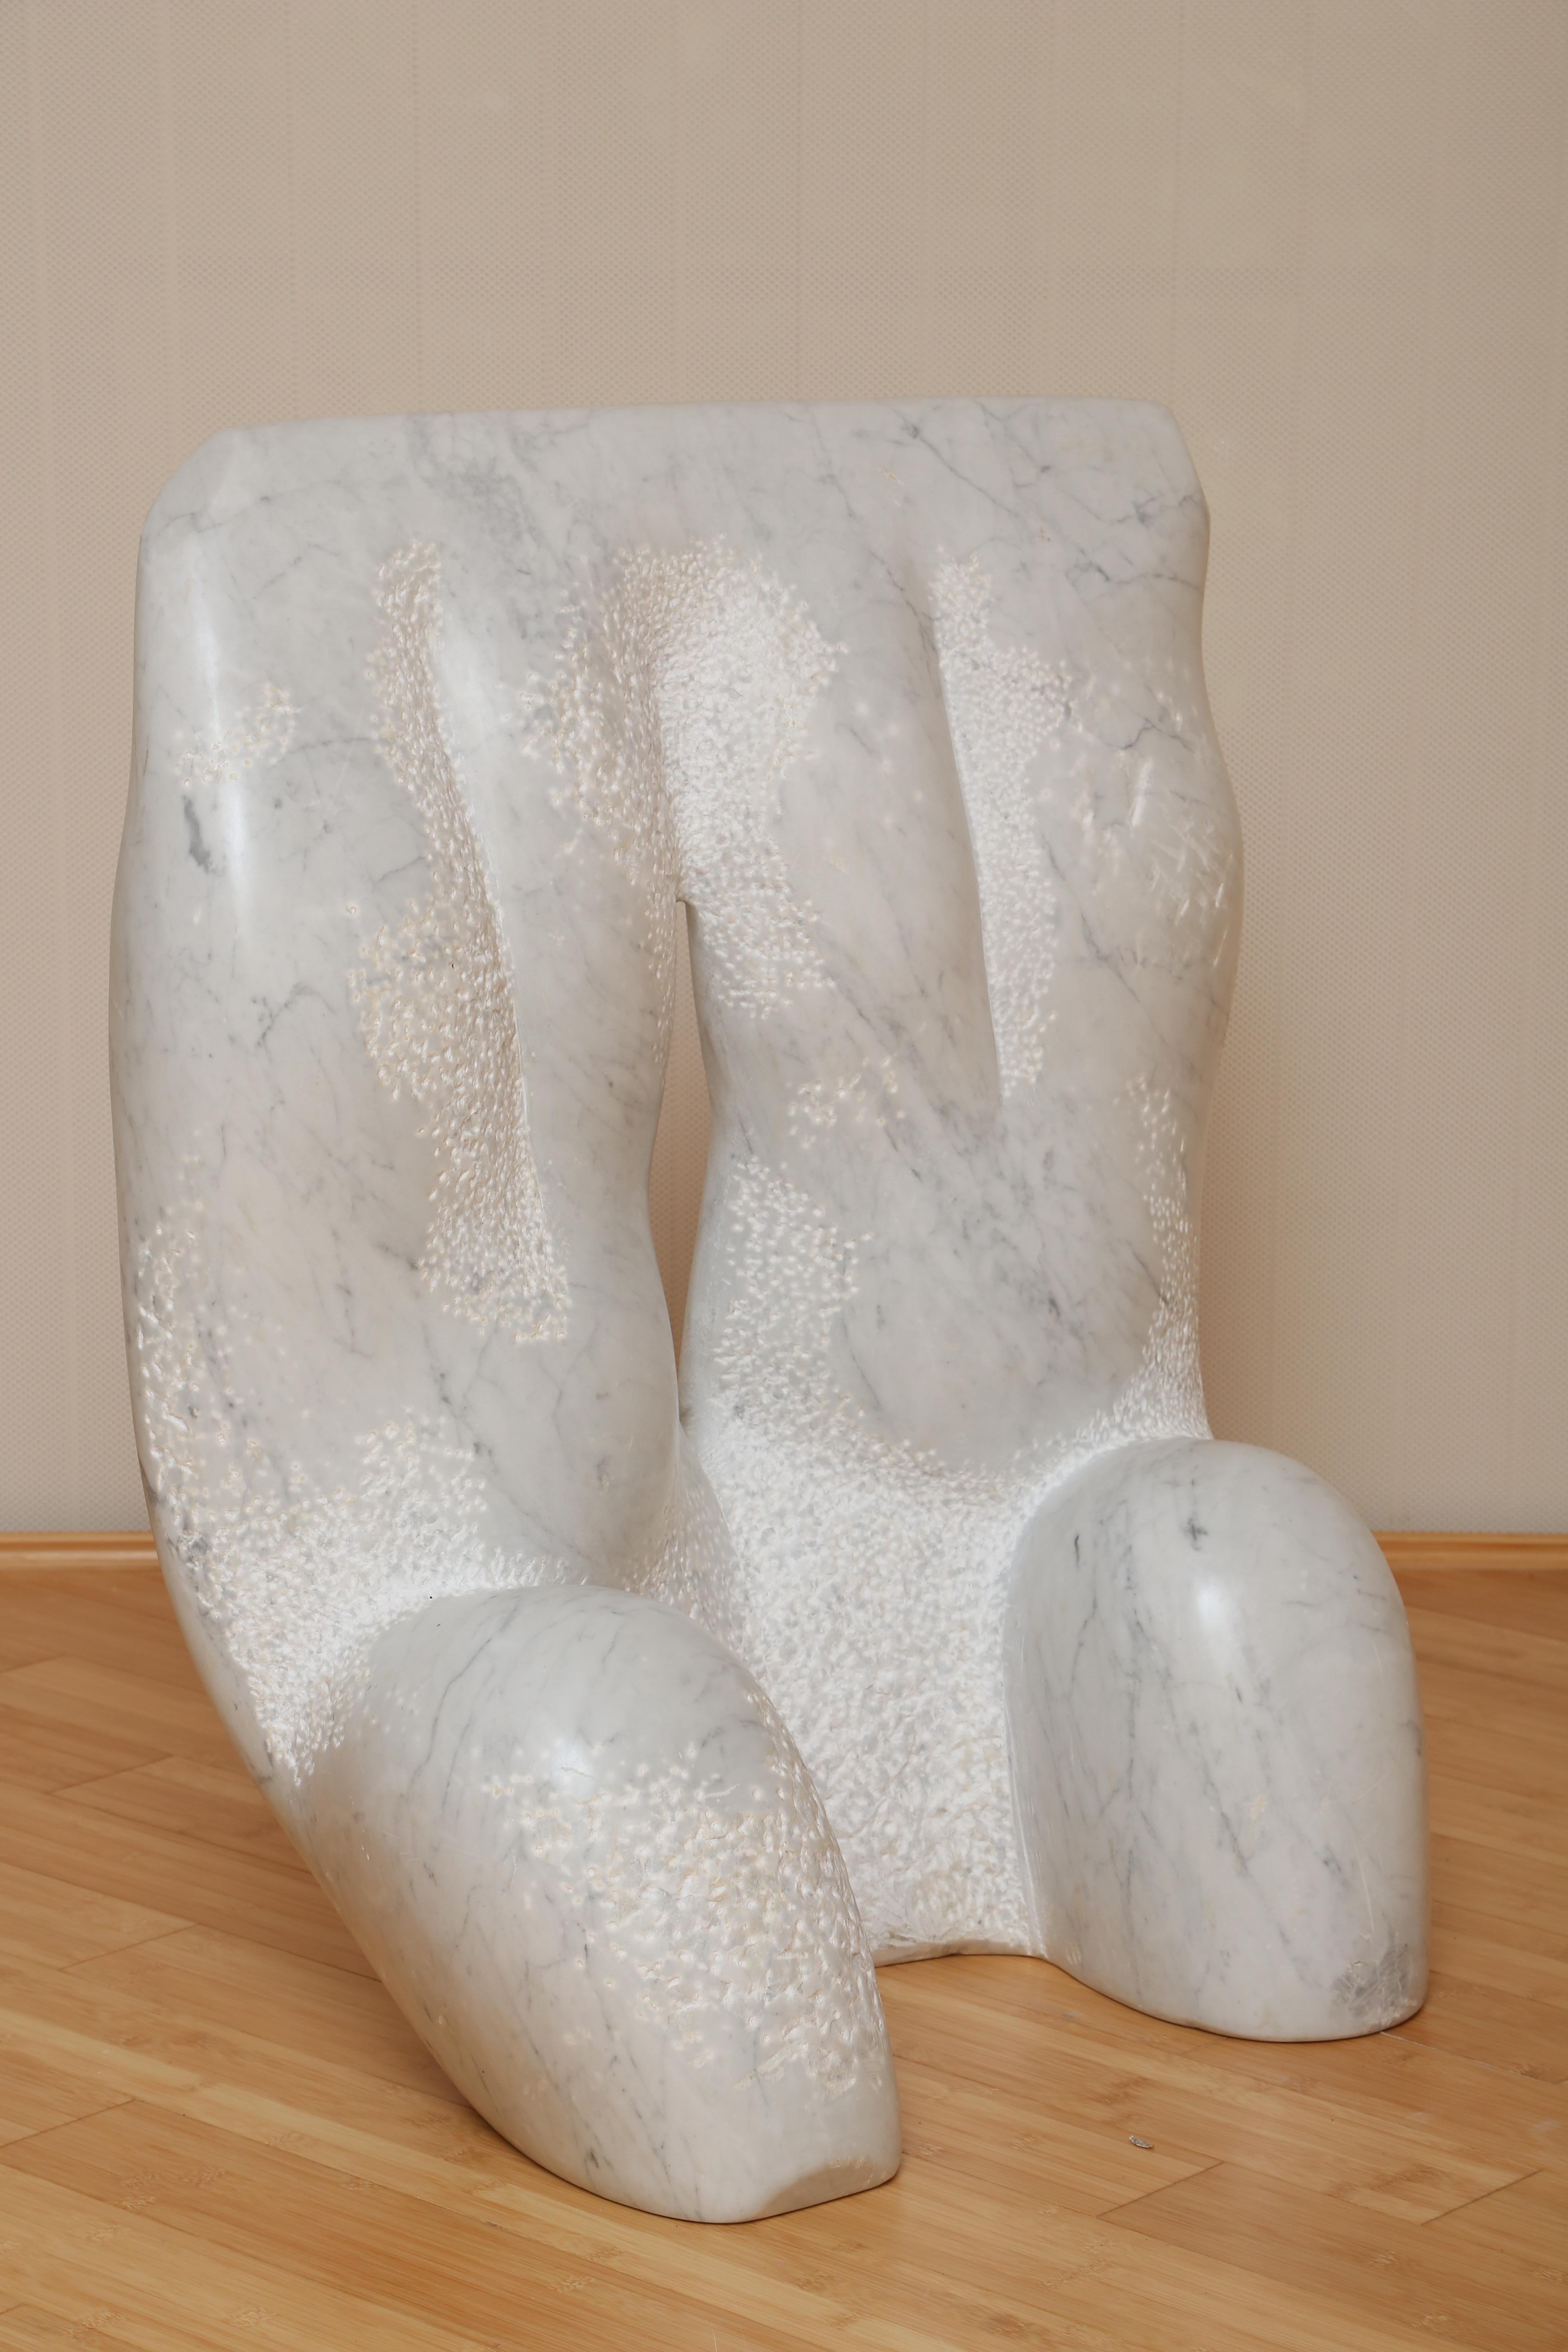 Carrara marble sculpture - Sculpture by Massimo Villani